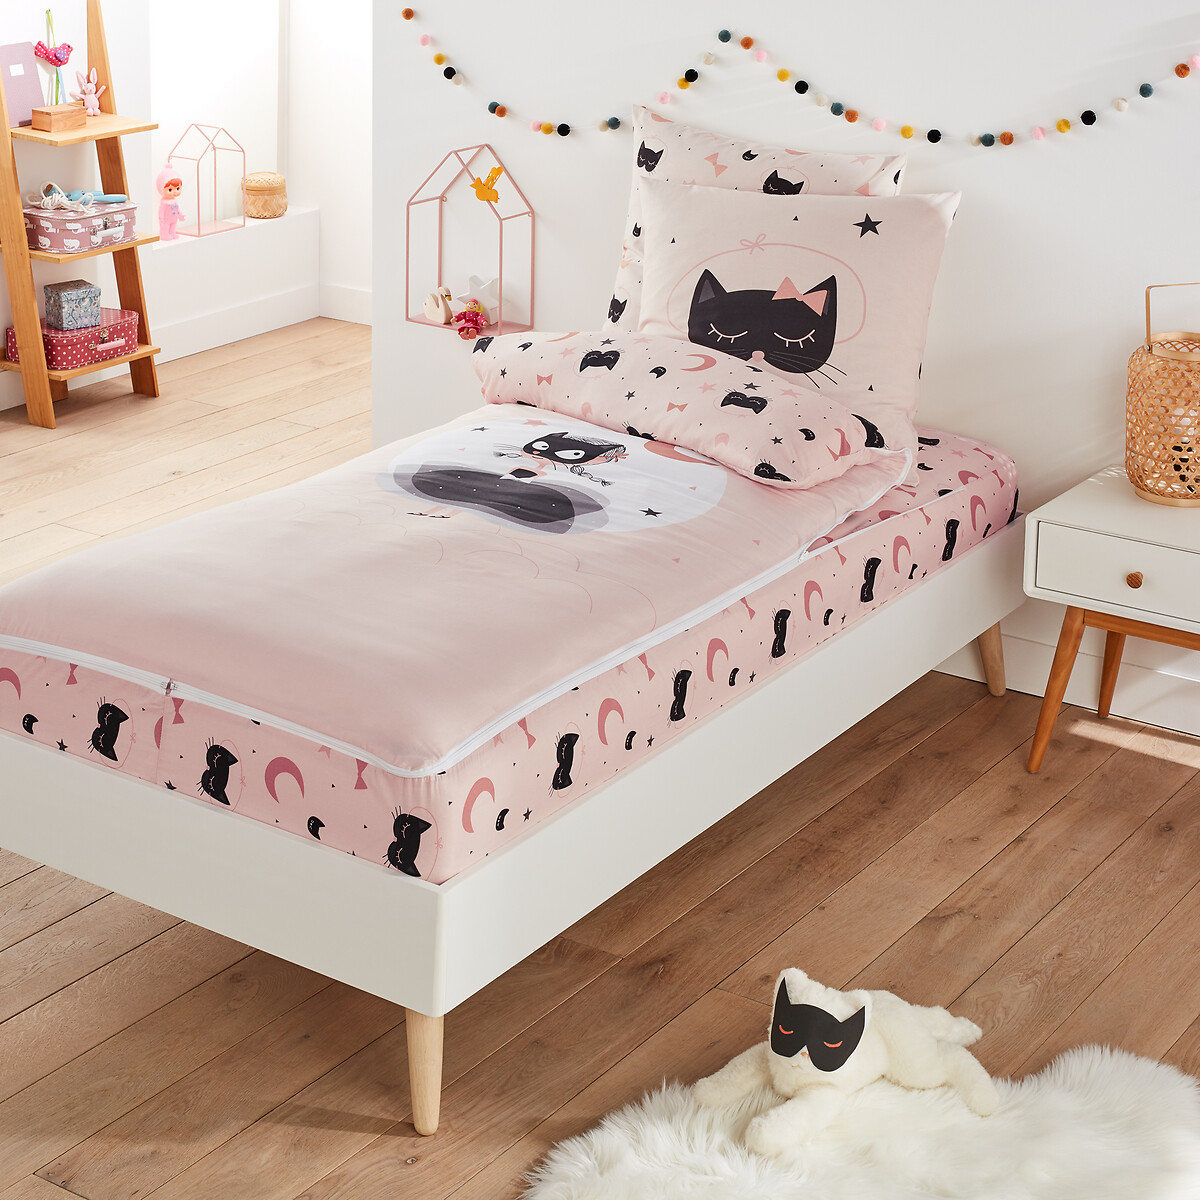 Cat Opera Bedding Set Without Duvet, Kmart Kids Bunk Beds